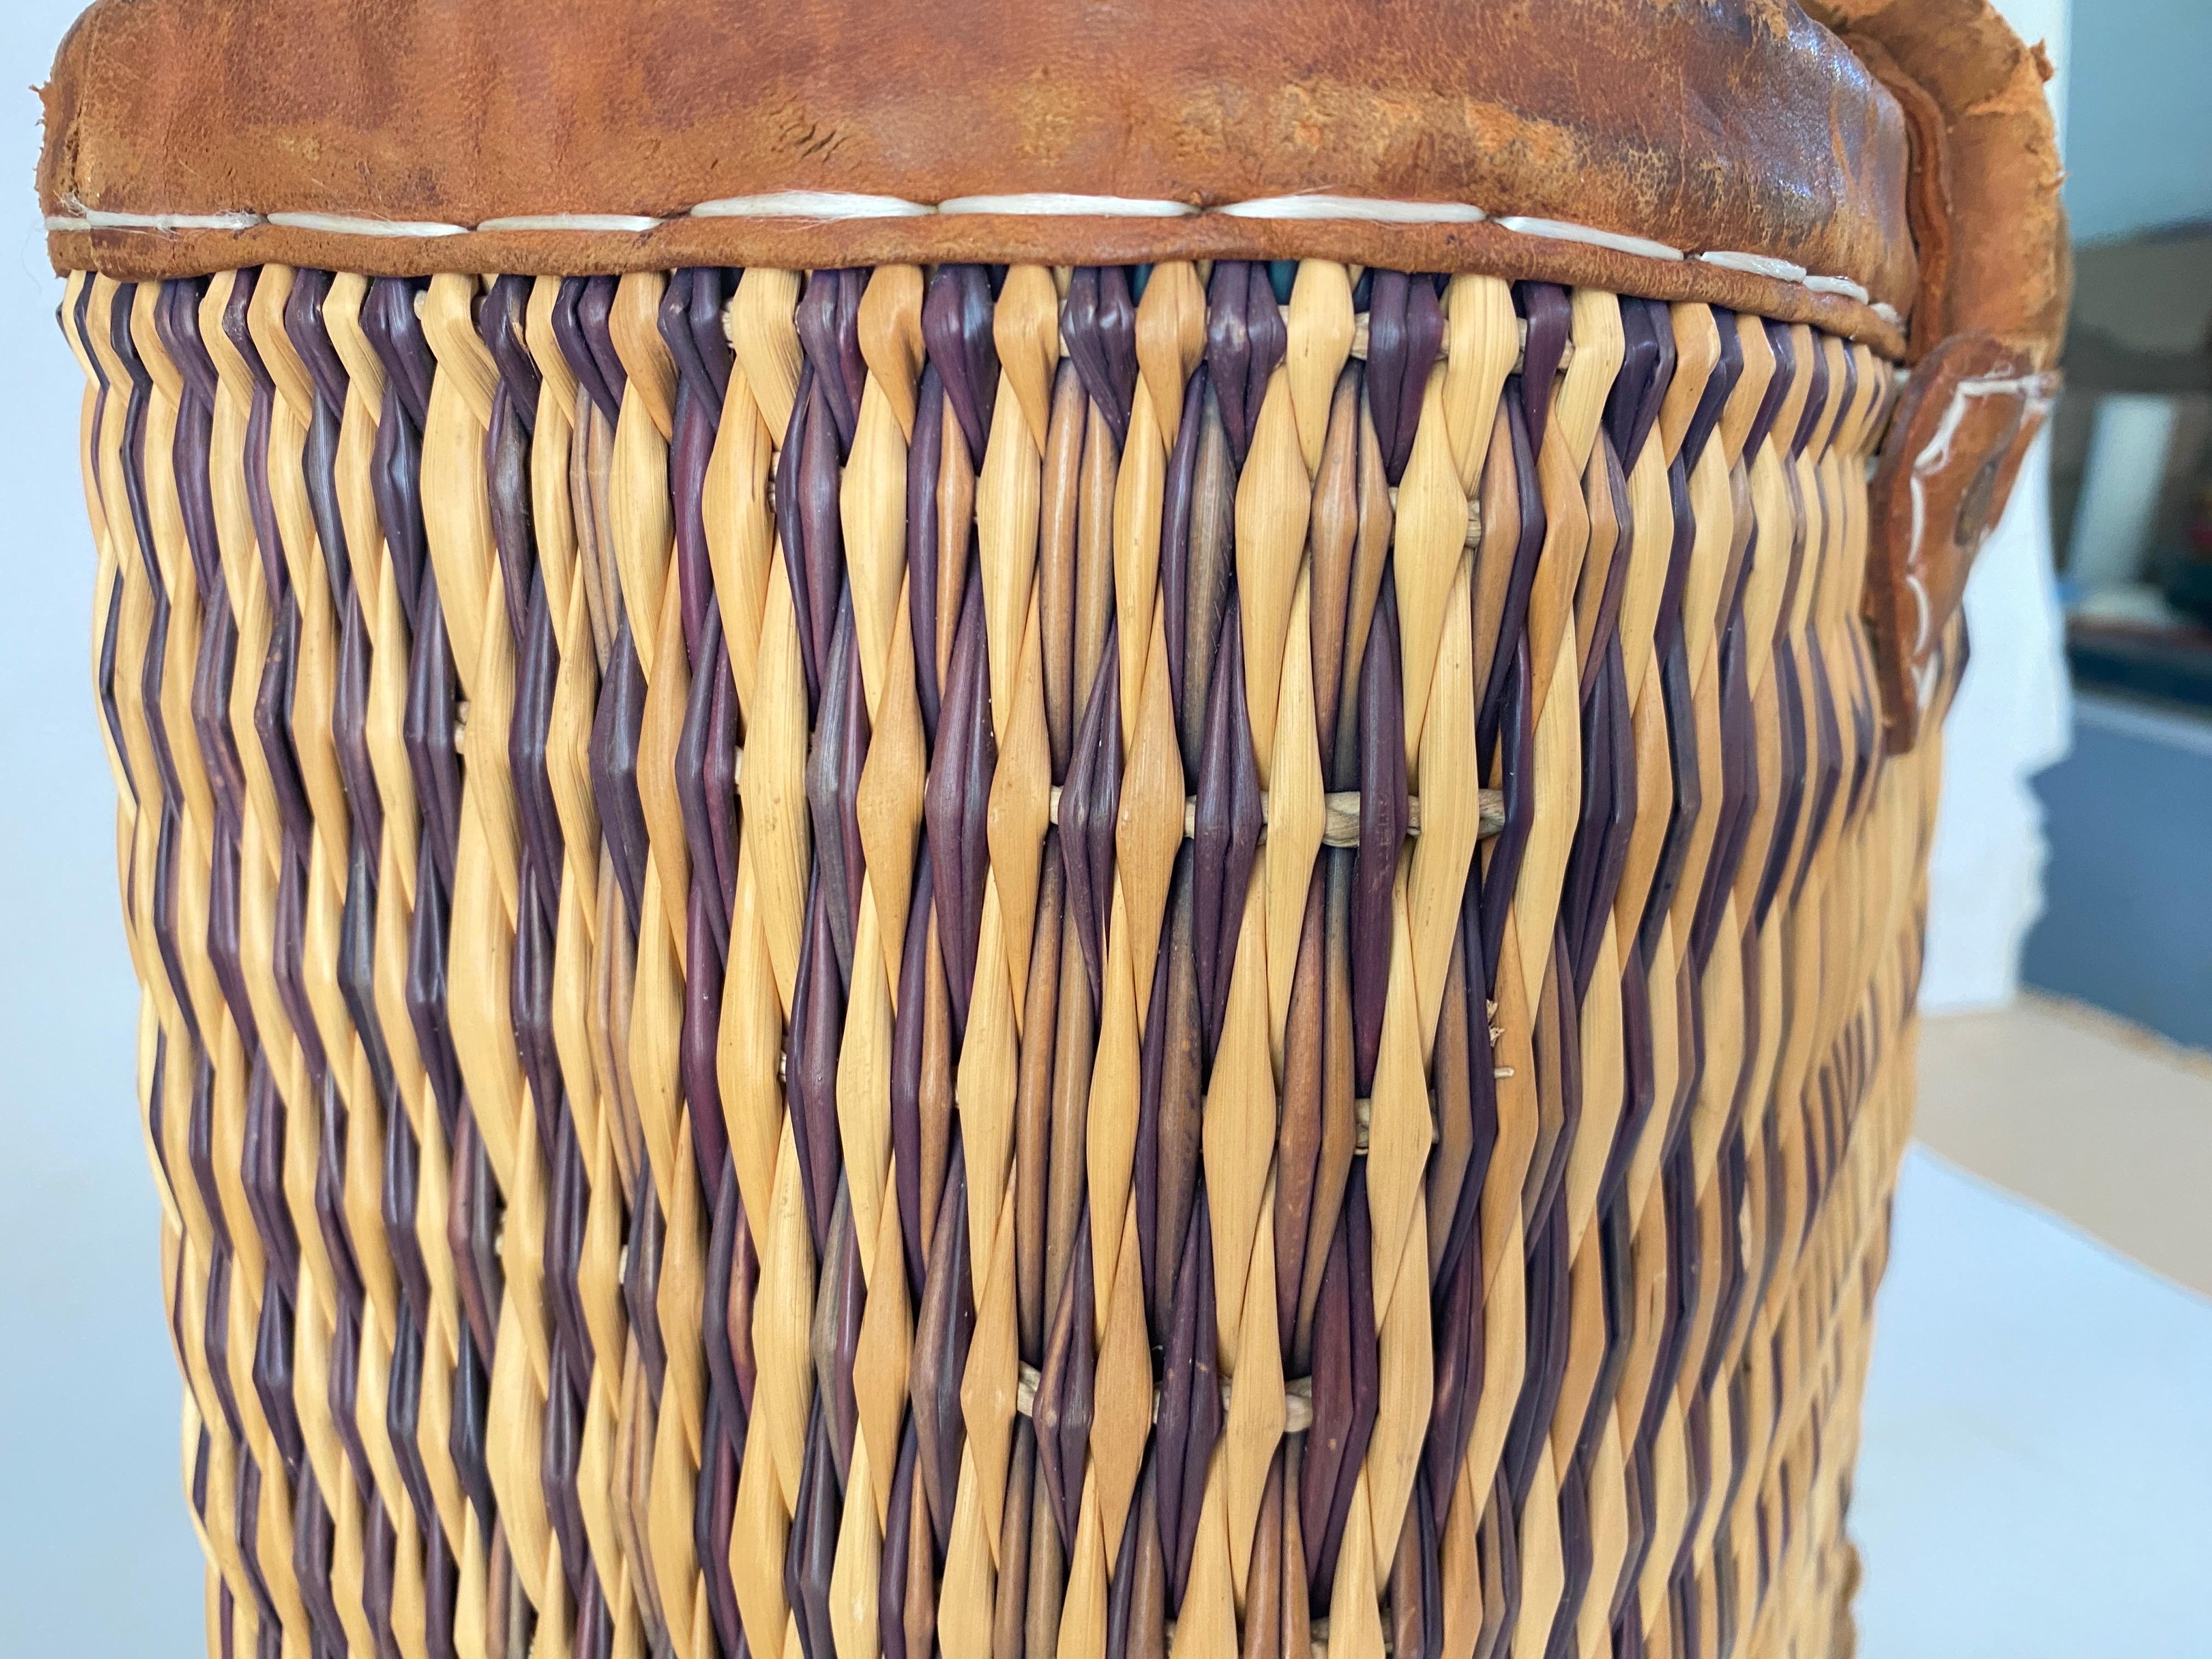 Vintage French Wicker Basket, Gold Color Stitched Leather Bag Handles France For Sale 9